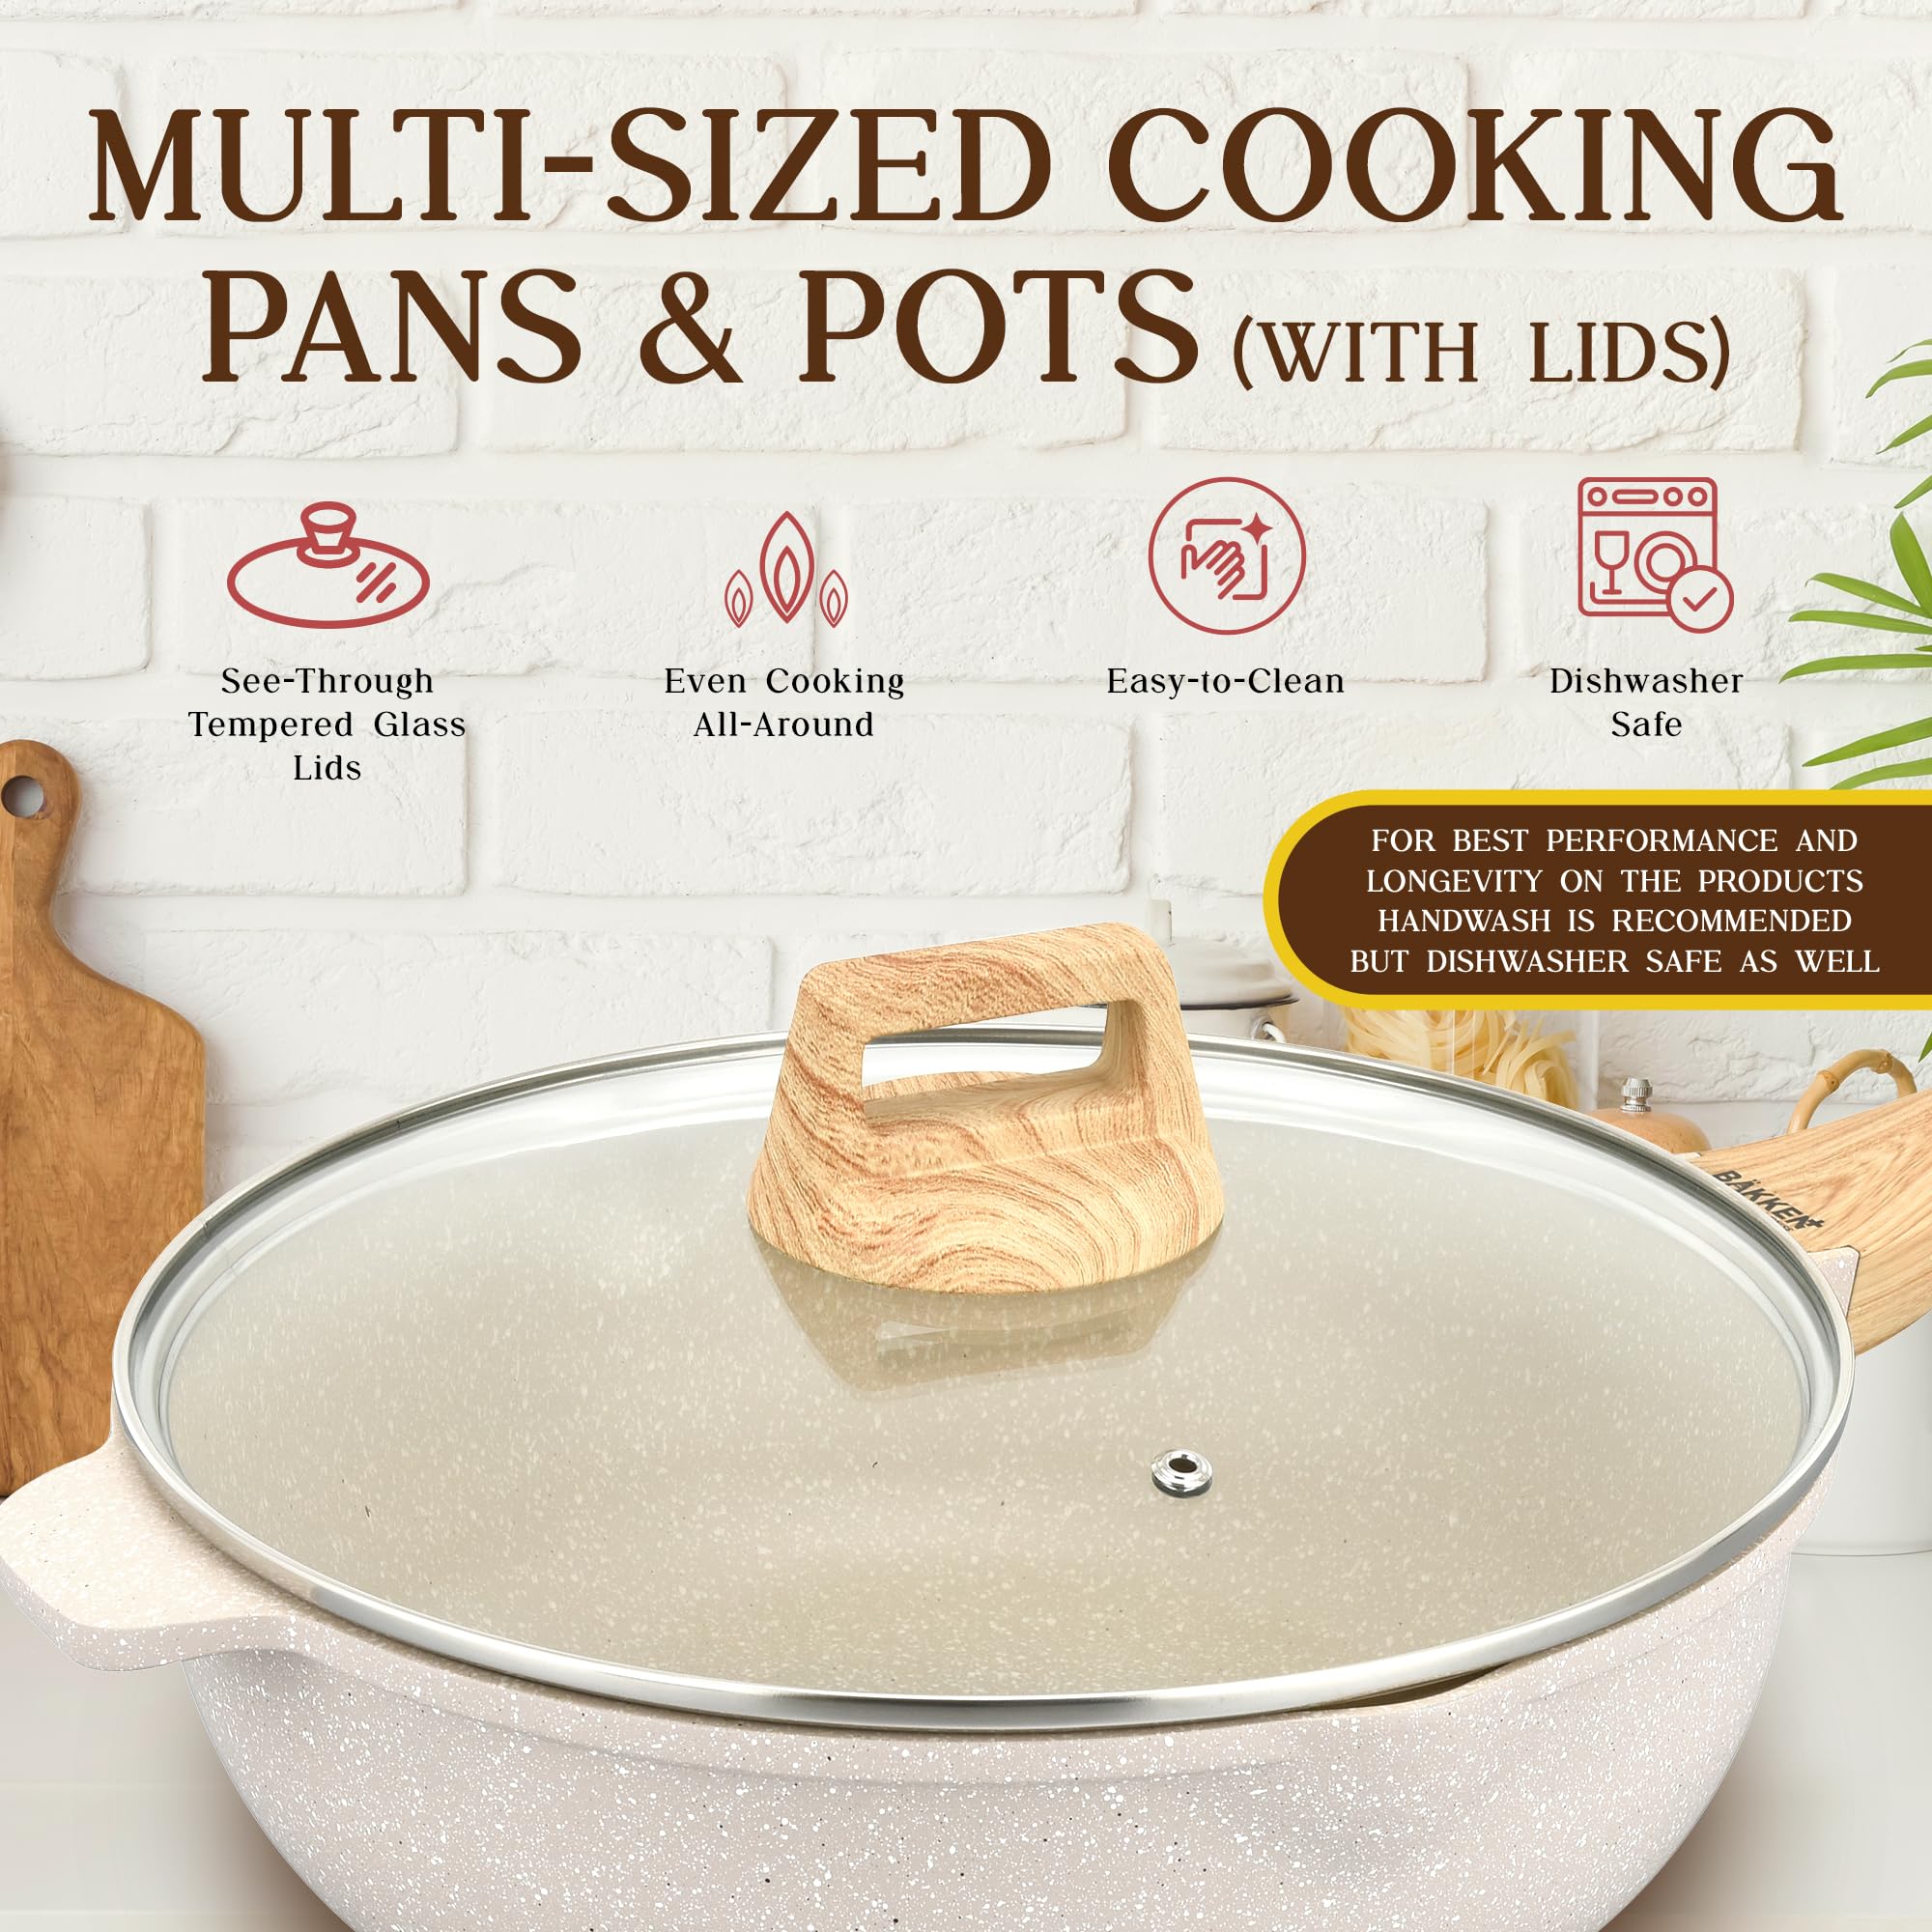 Bakken-Swiss 20-Piece Kitchen Cookware Set – Granite Non-Stick – Eco-Friendly – for All Stoves & Oven-Safe